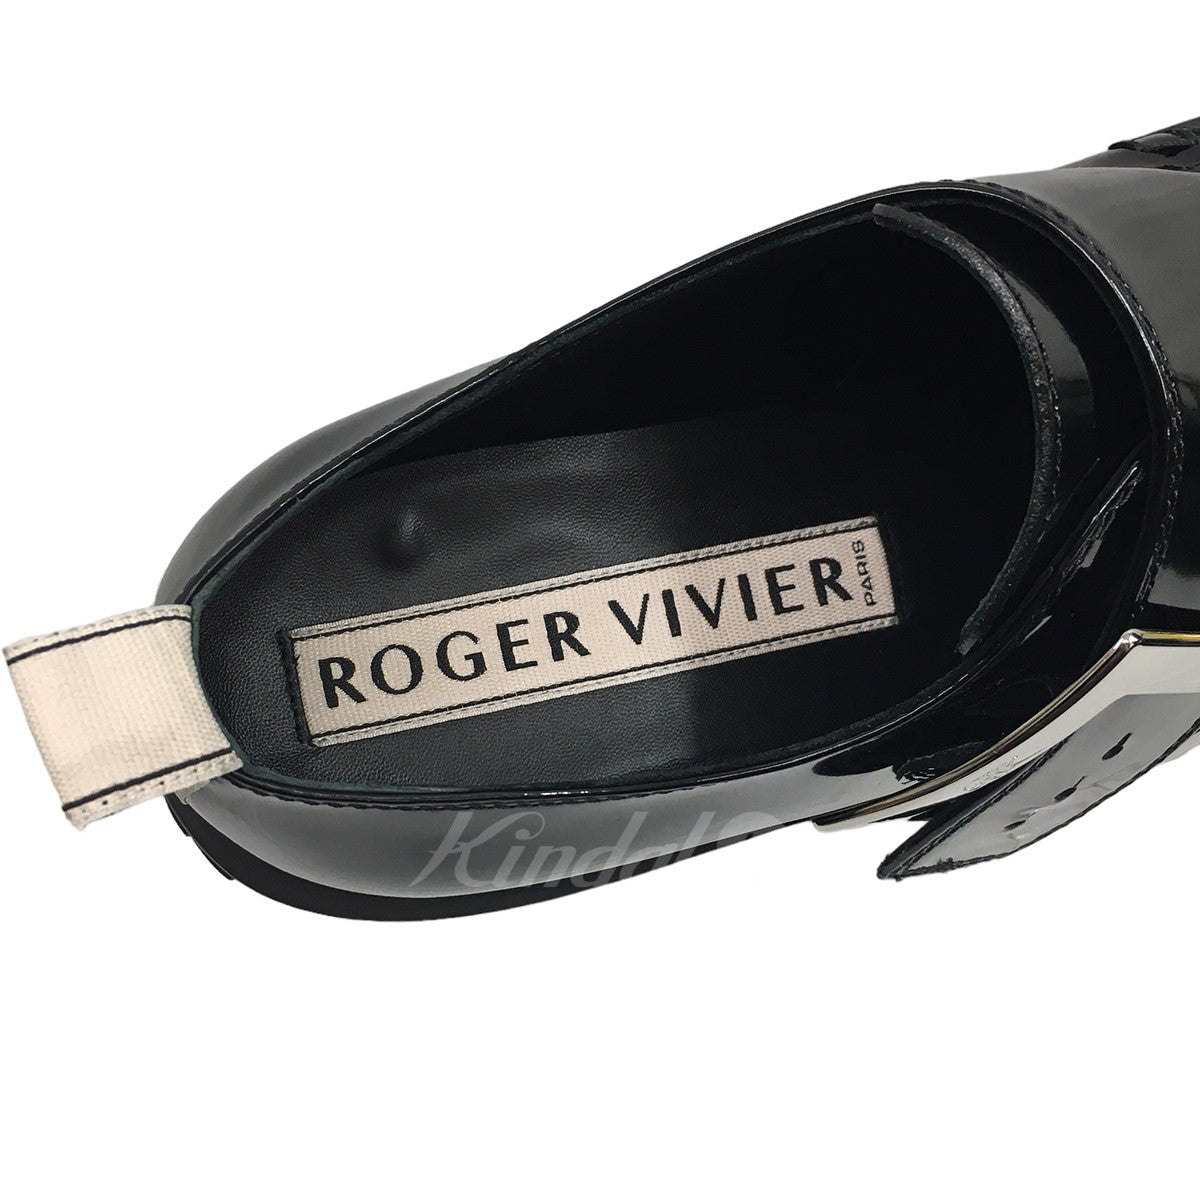 ROGER VIVIER(ロジェヴィヴィエ) Viv’ Go-Thick」 メタル バックル レザー ローファー